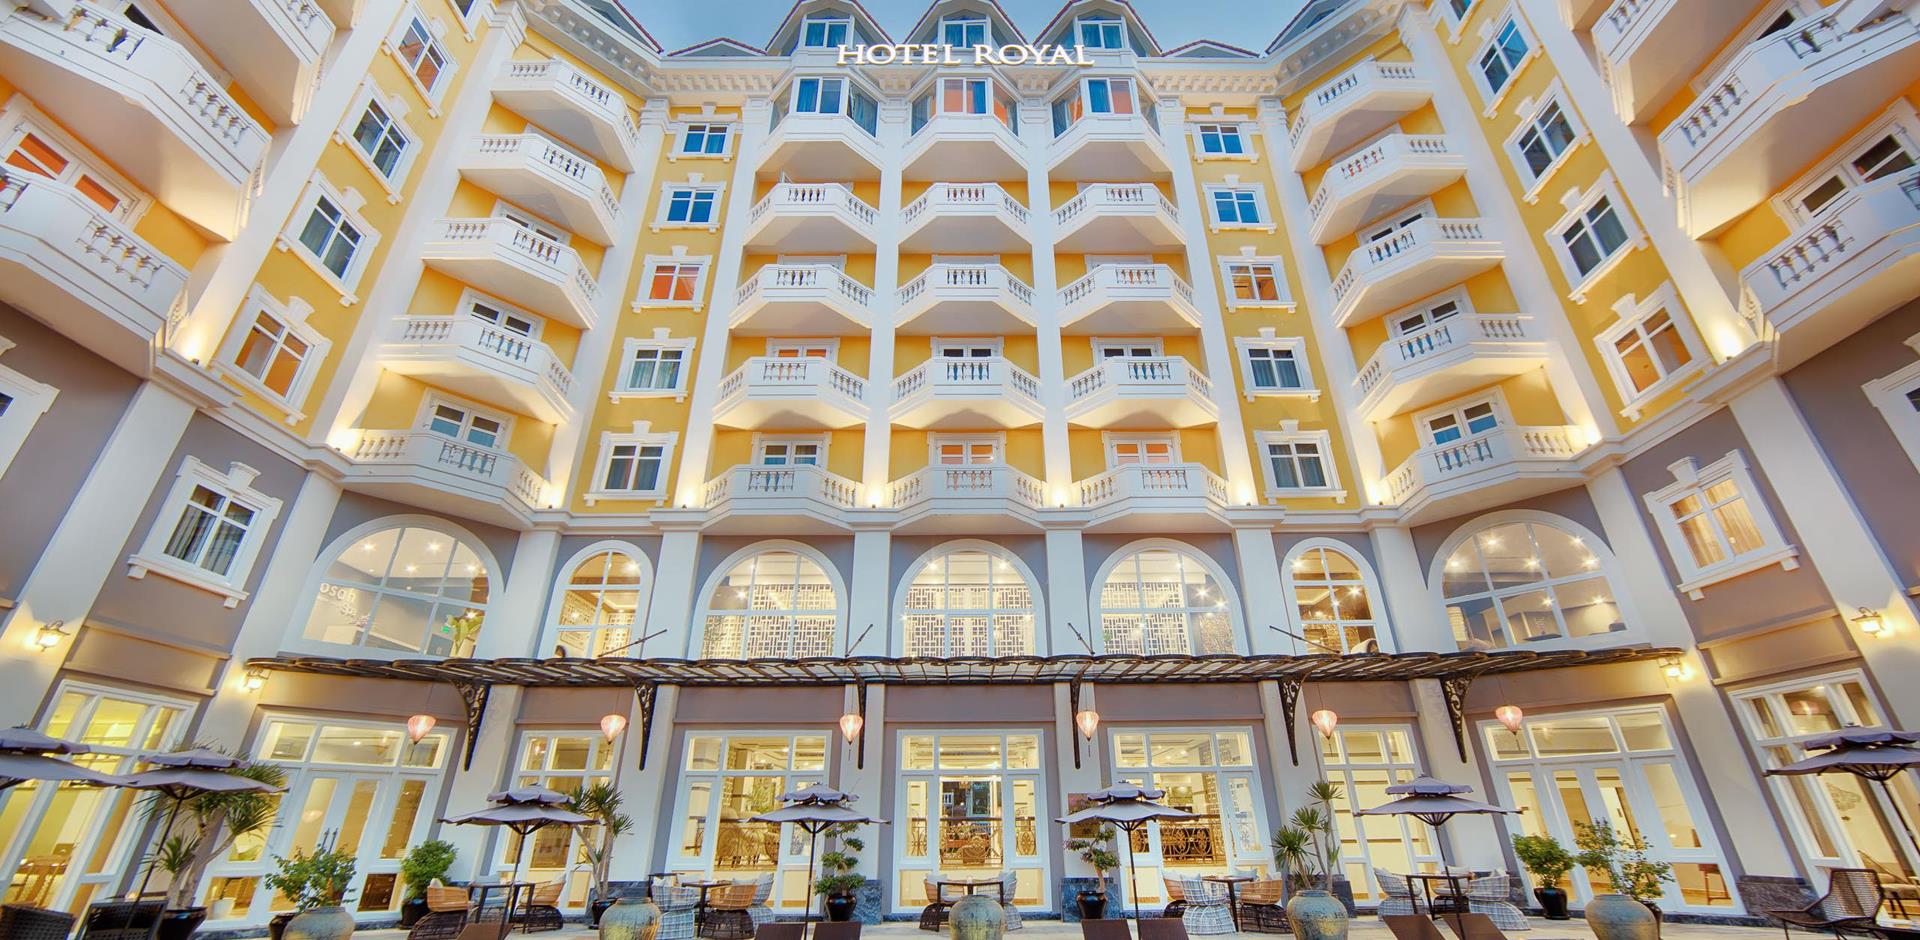 Exterior, Hotel Royal Hoi An – MGallery by Sofitel, Vietnam